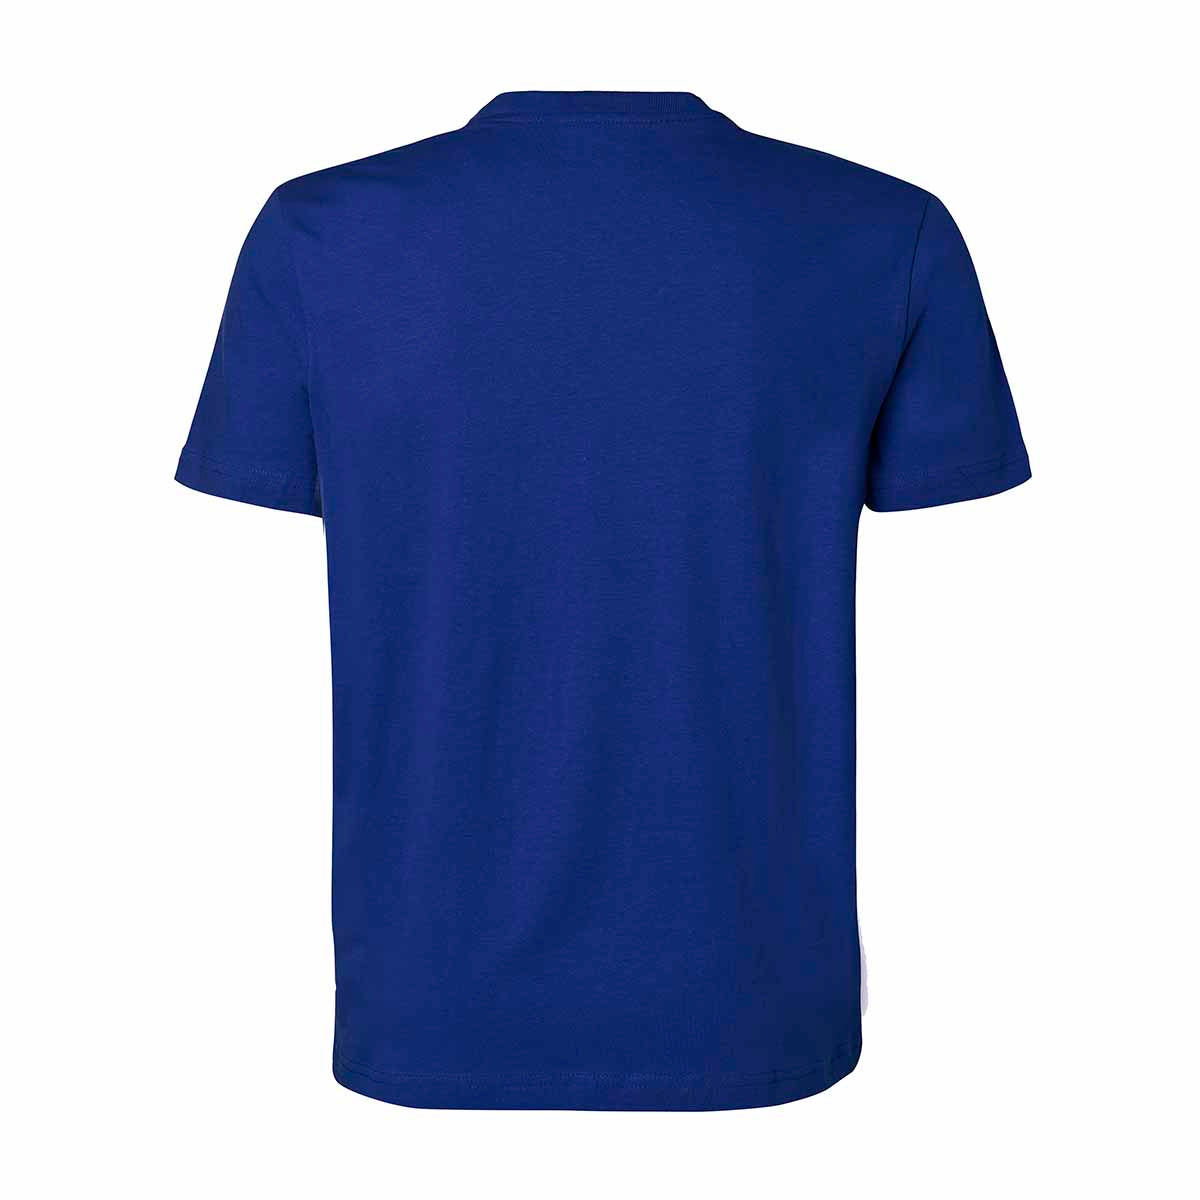 Camiseta Kappa Eremo - Ropa Ideal Para El Gim O Entrenar  MKP